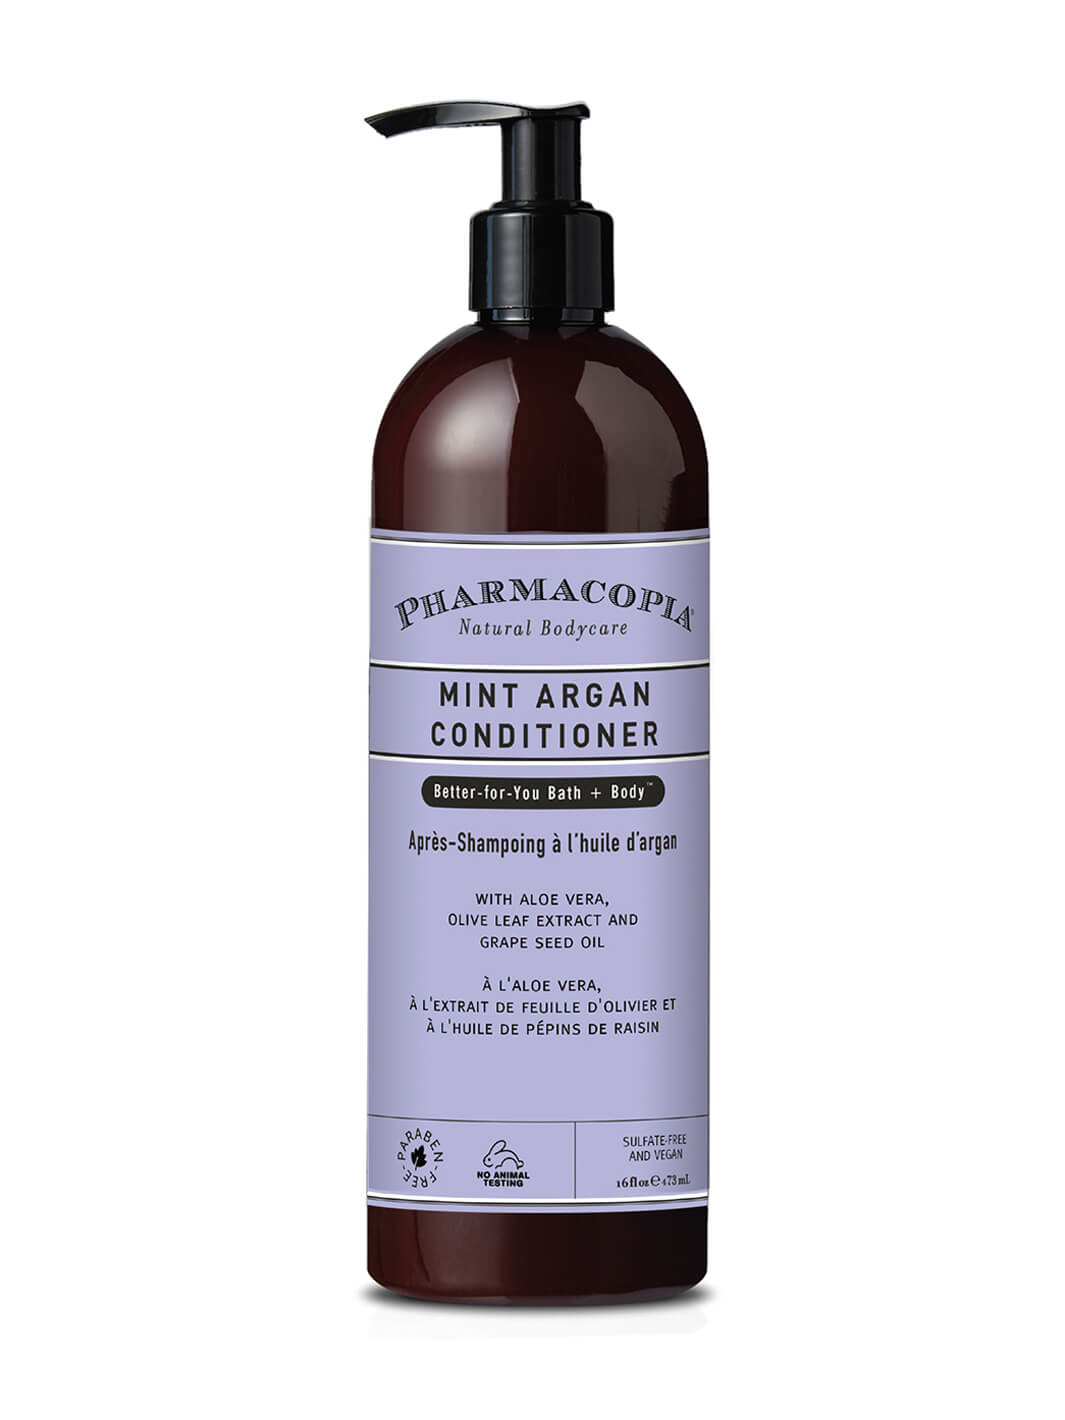 Mint Argan Shampoo 16oz – Pharmacopia Natural